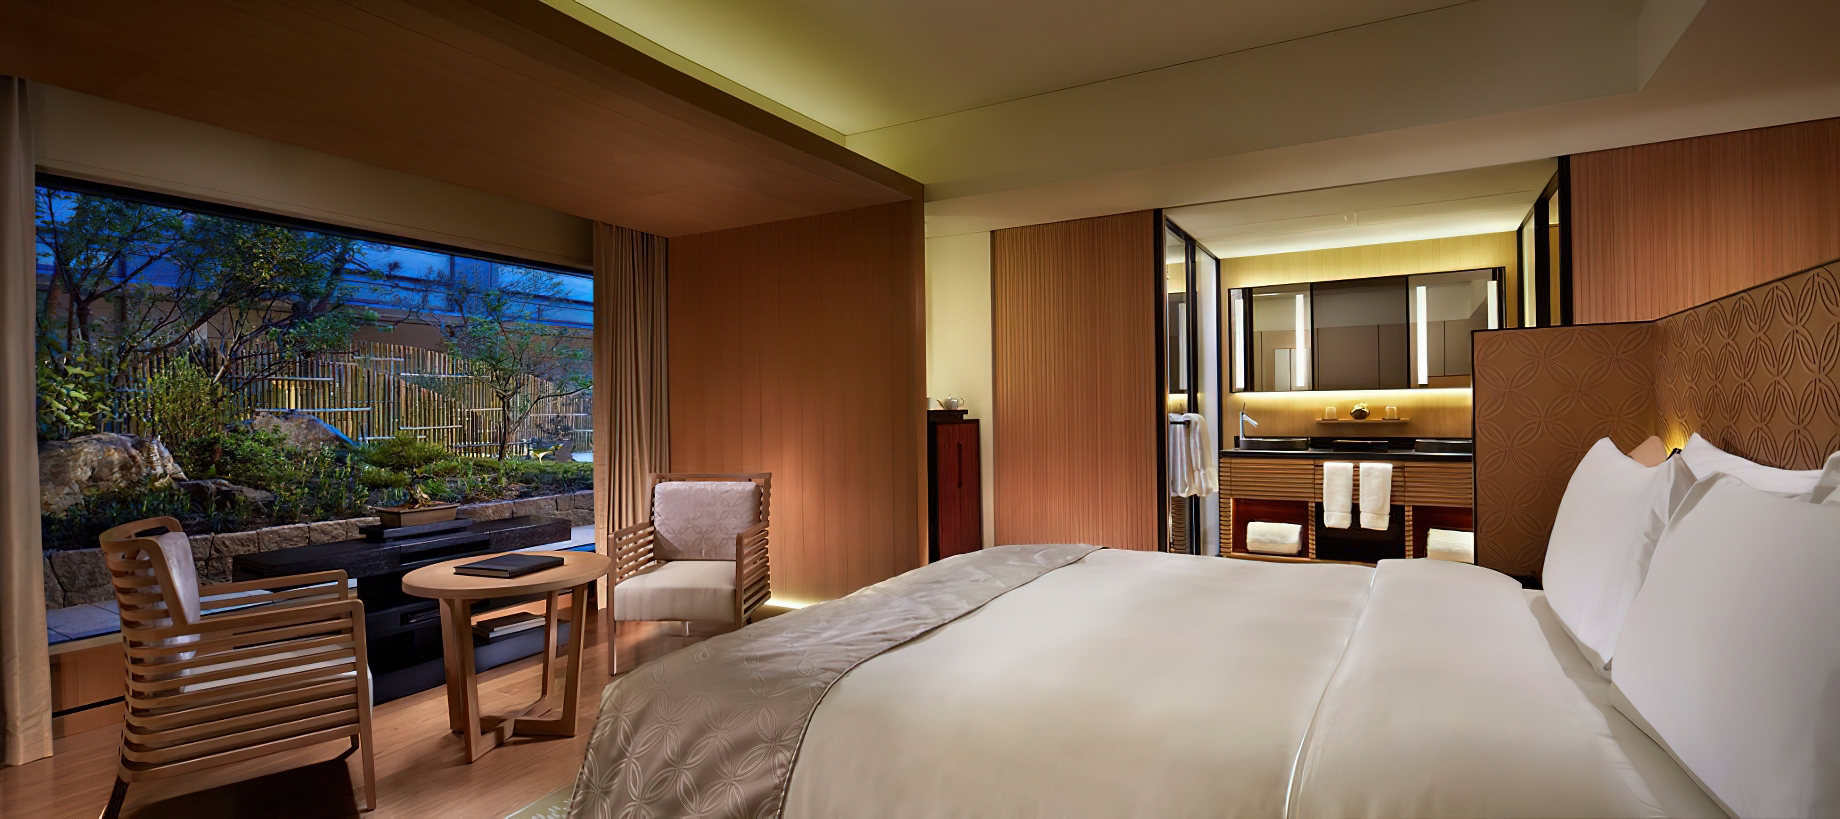 The Ritz-Carlton, Kyoto Hotel – Nakagyo Ward, Kyoto, Japan – Deluxe Garden Room Bed